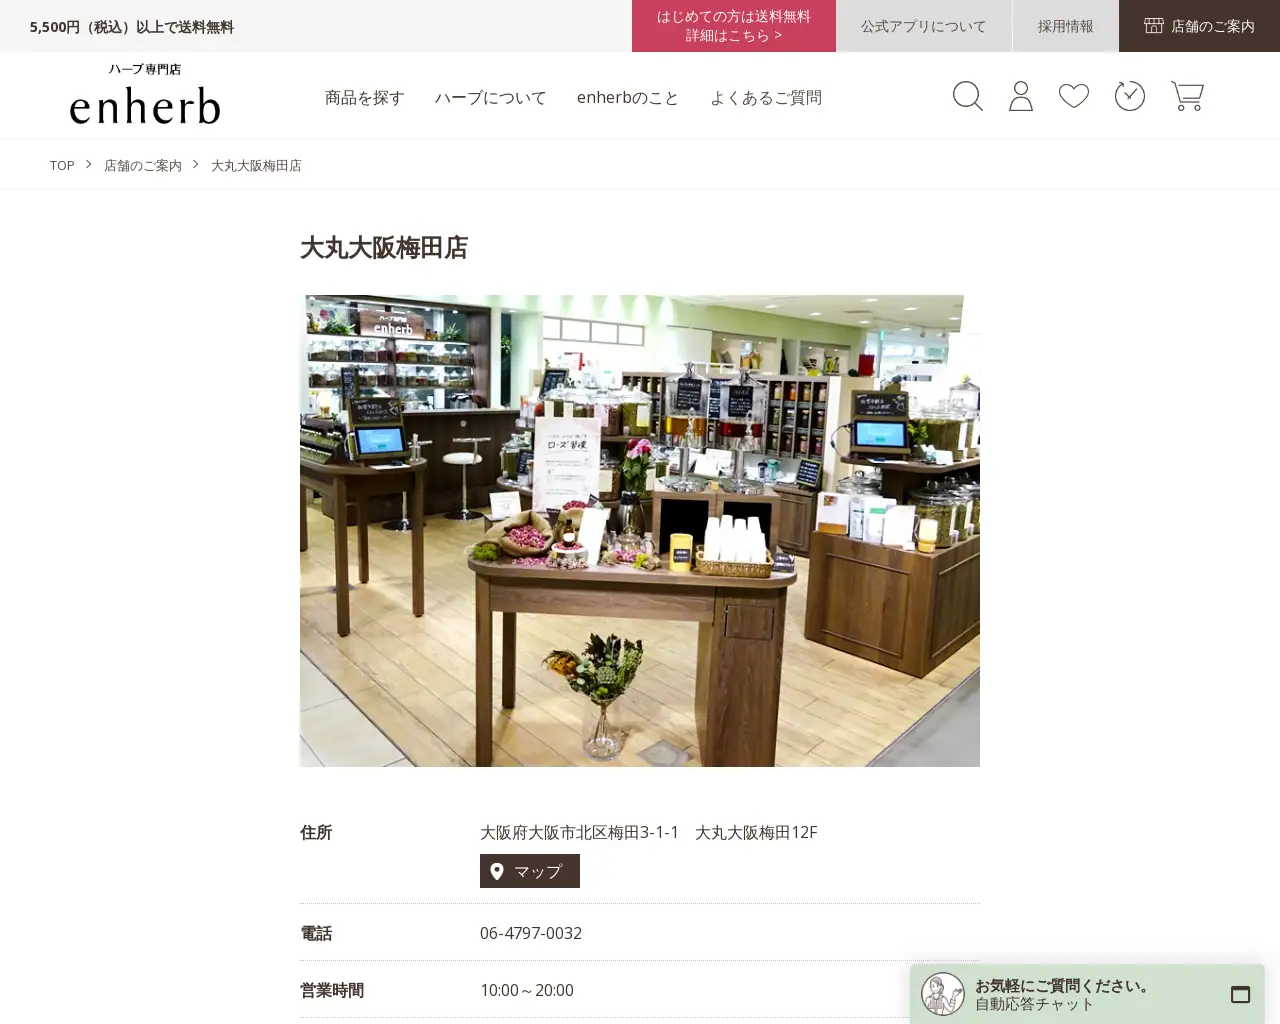 enherb 大丸大阪梅田店 site